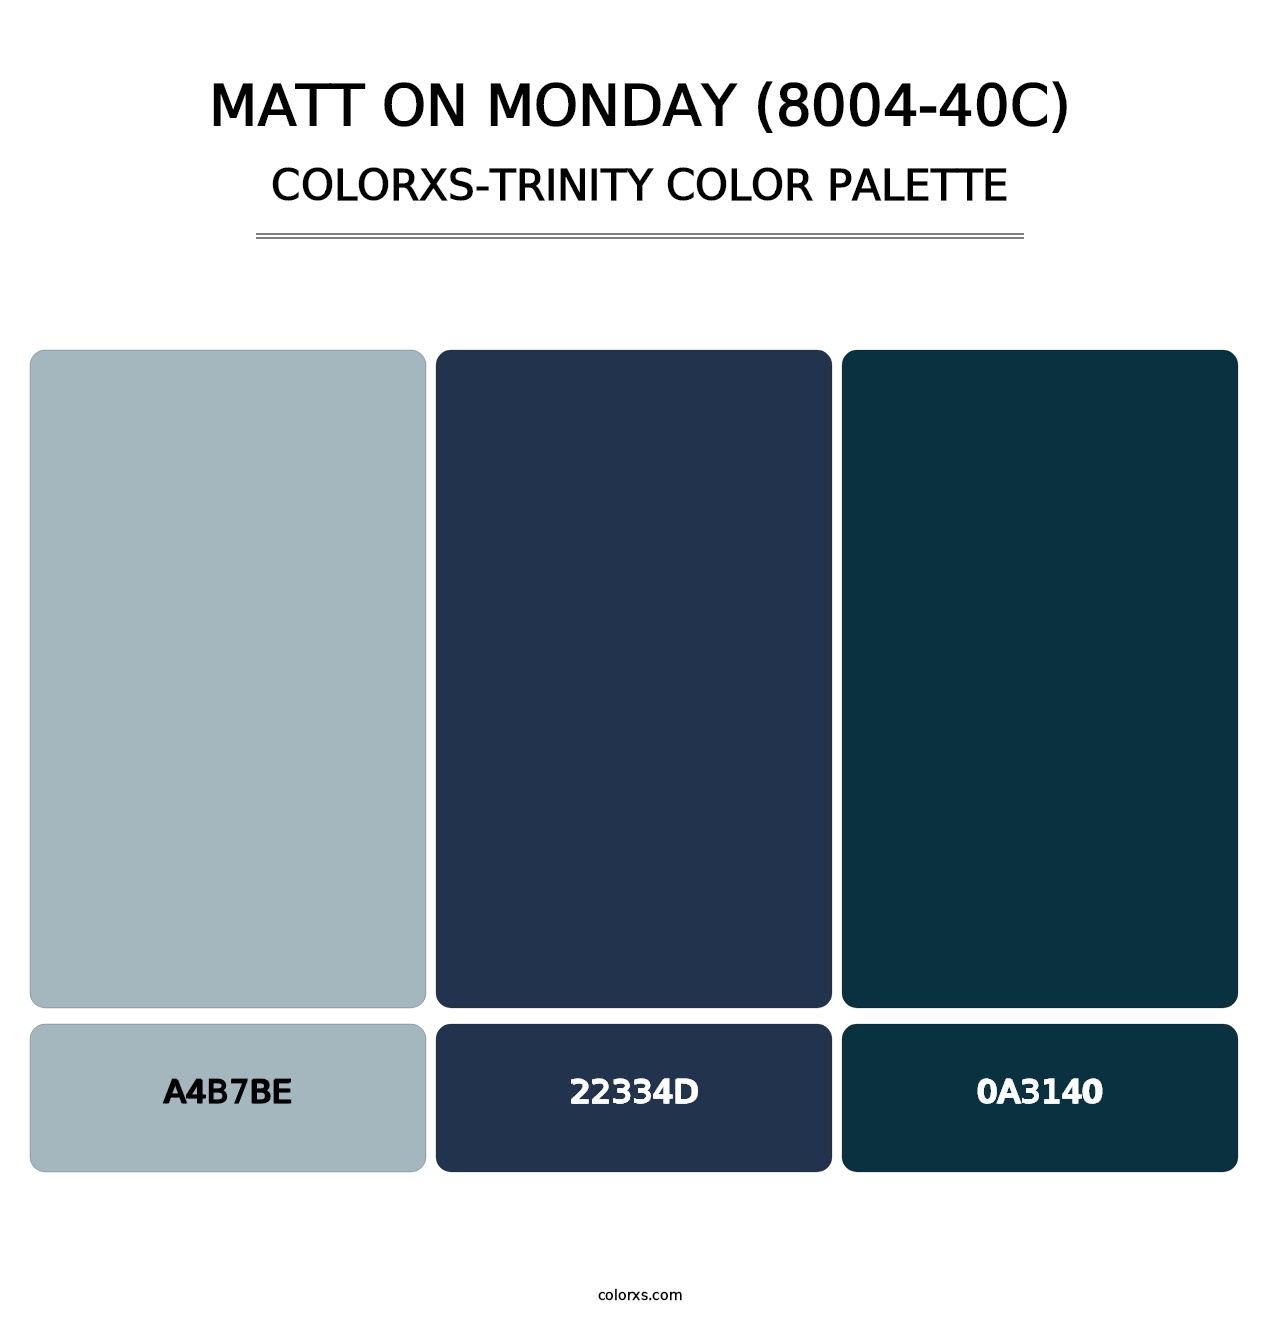 Matt on Monday (8004-40C) - Colorxs Trinity Palette